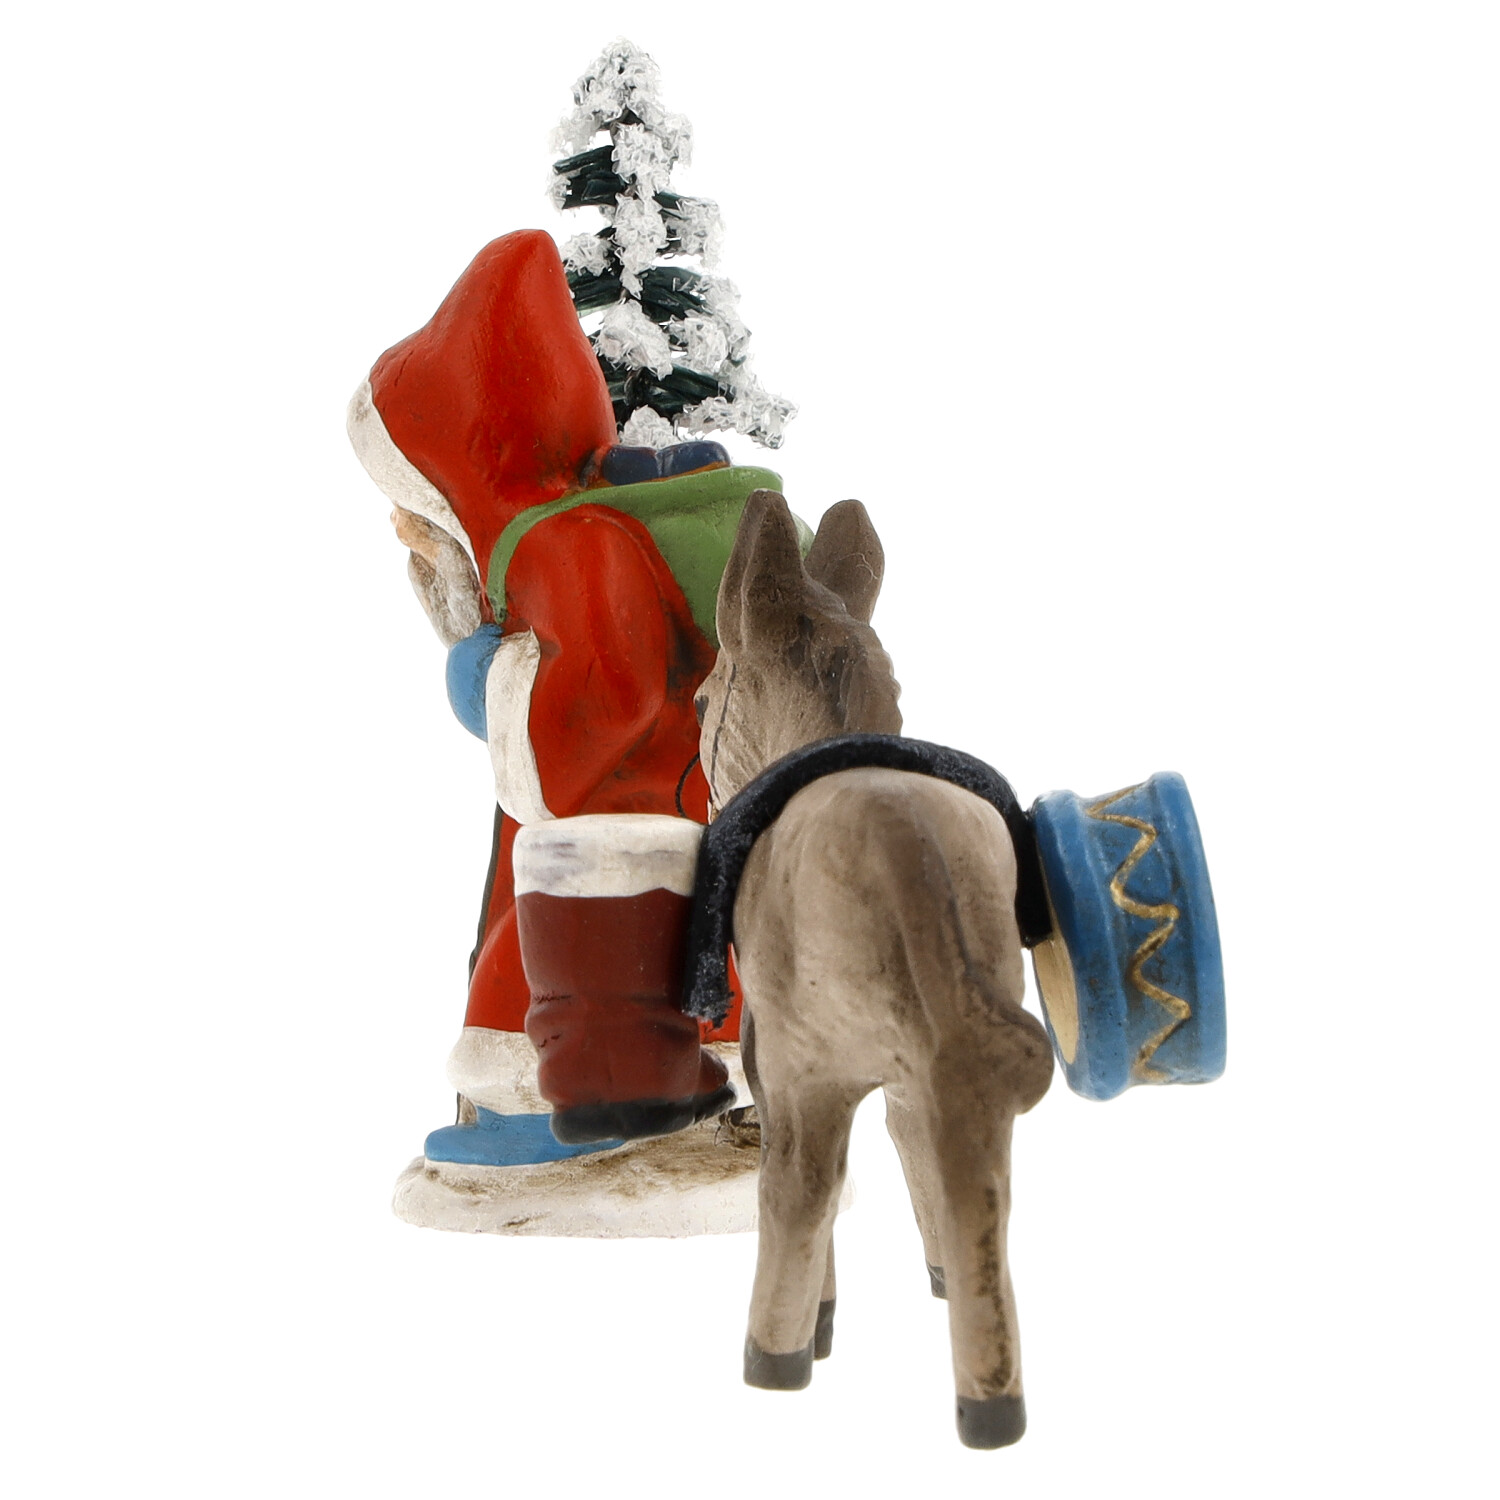 Miniature Santa with donkey - Marolin Papermaché - made in Germany